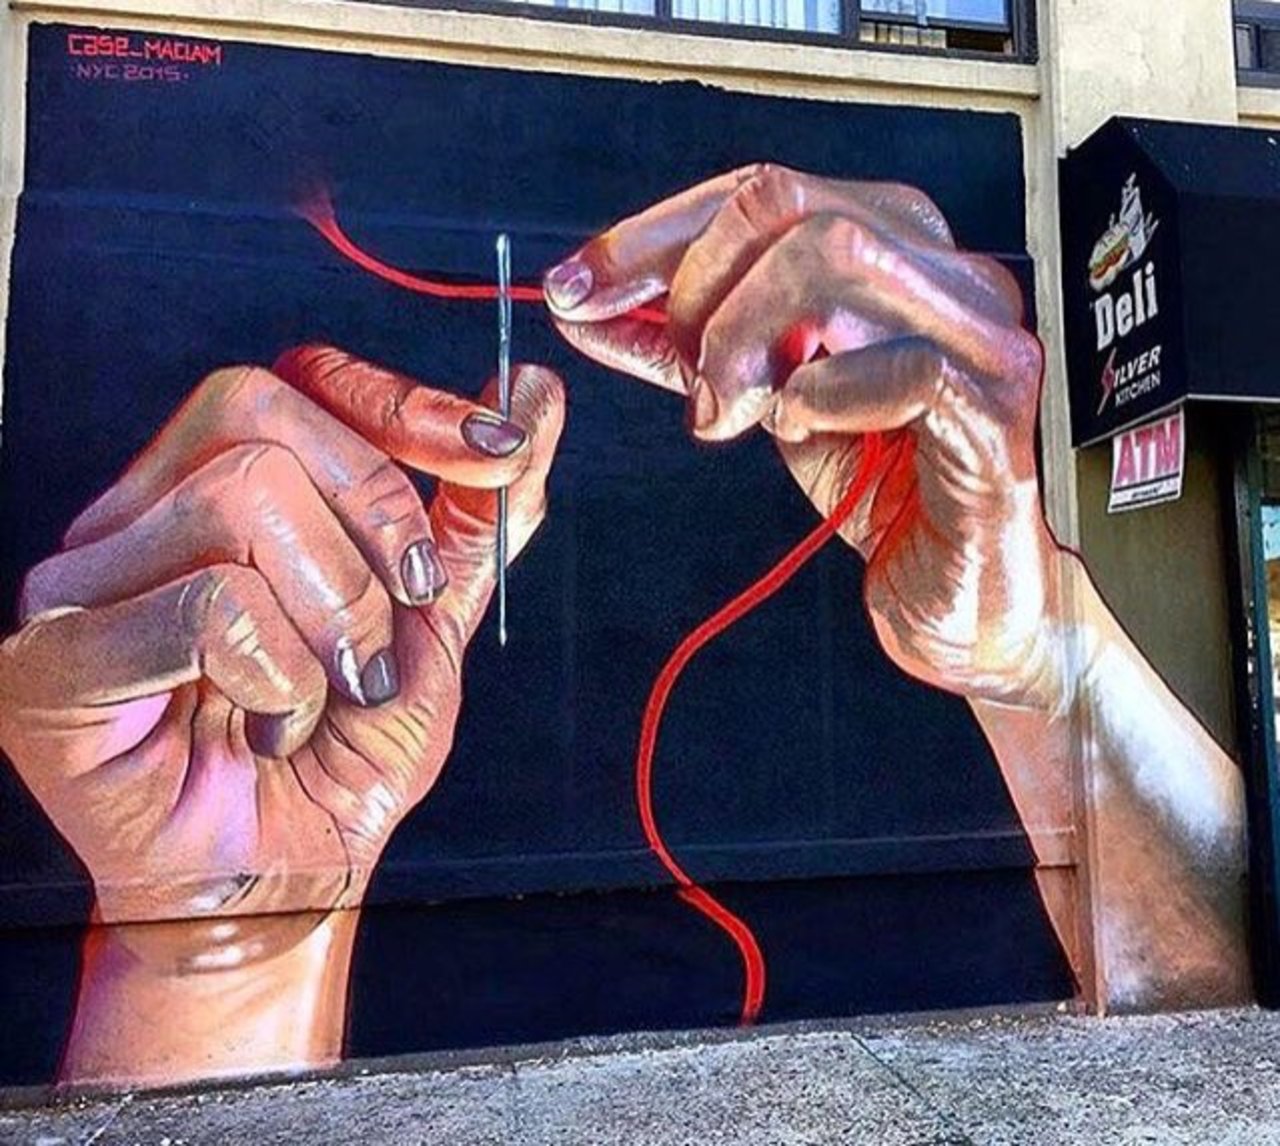 New Street Art by Case Ma'Claim in NYC 

#art #graffiti #mural #streetart https://t.co/Col17fUBYP